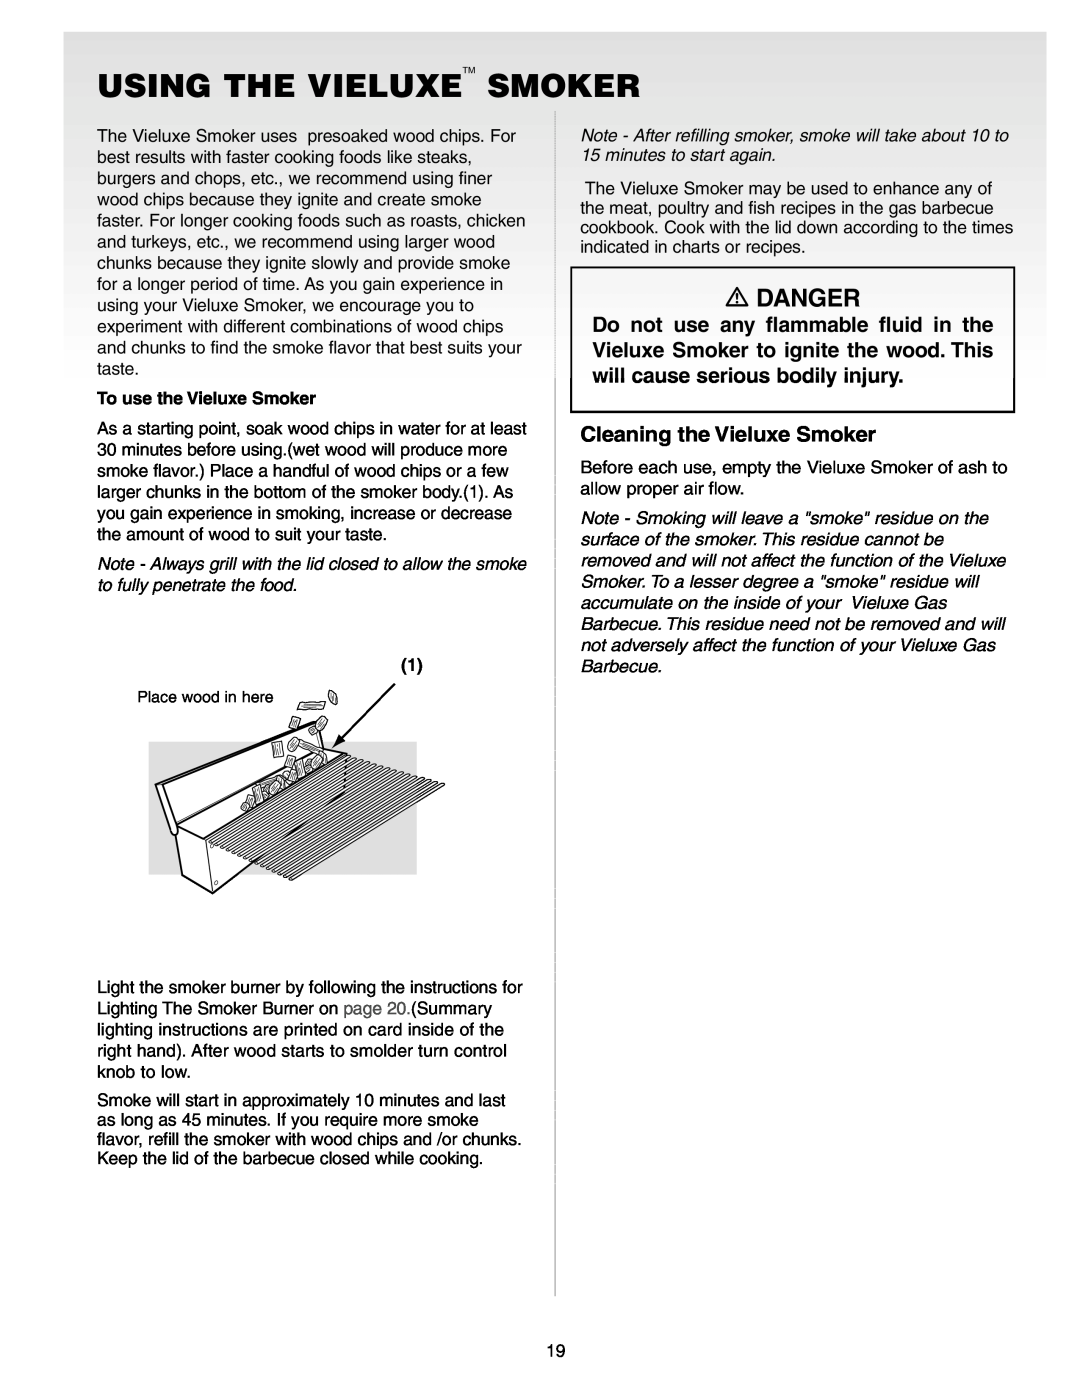 Weber Gas Burner manual Using The Vieluxe Smoker, Danger 